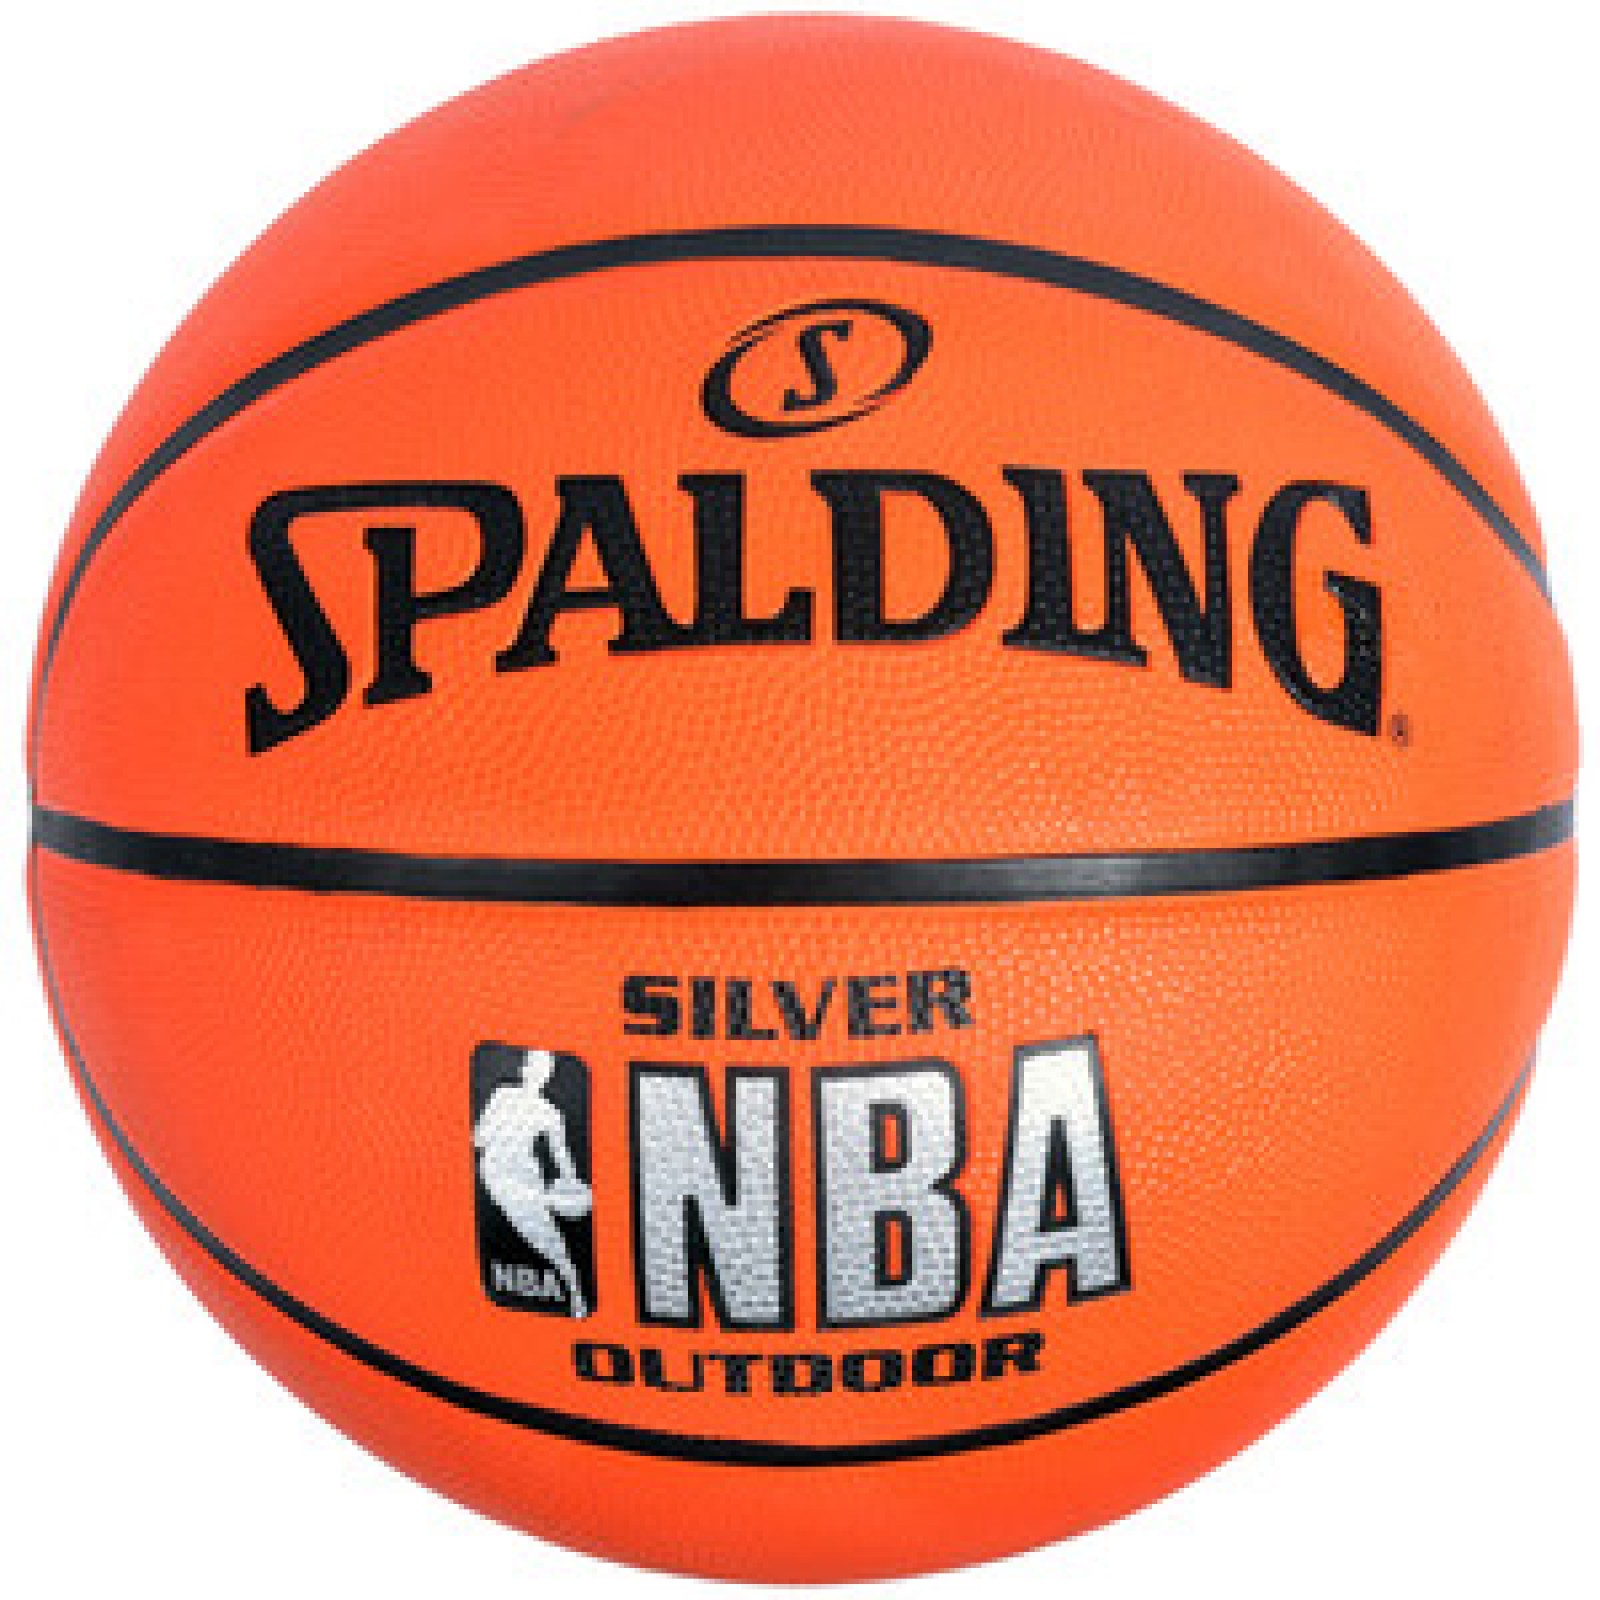 Spalding basketball Silver Outdoor (Kids) - Fitshop